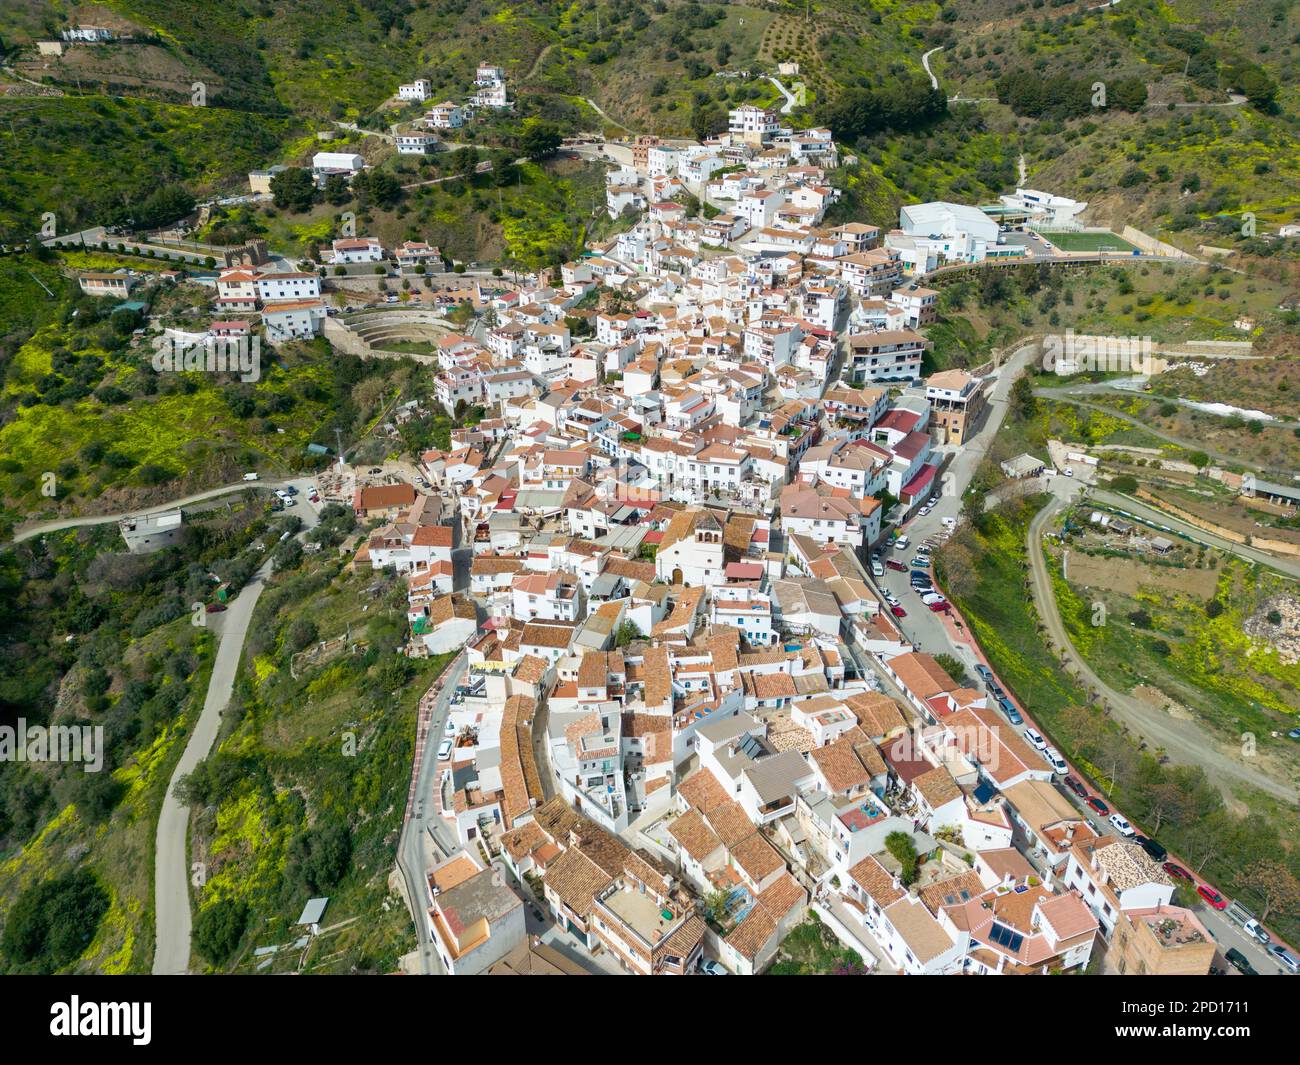 municipality of Moclinejo in the Axarquia region of Malaga, Spain Stock Photo